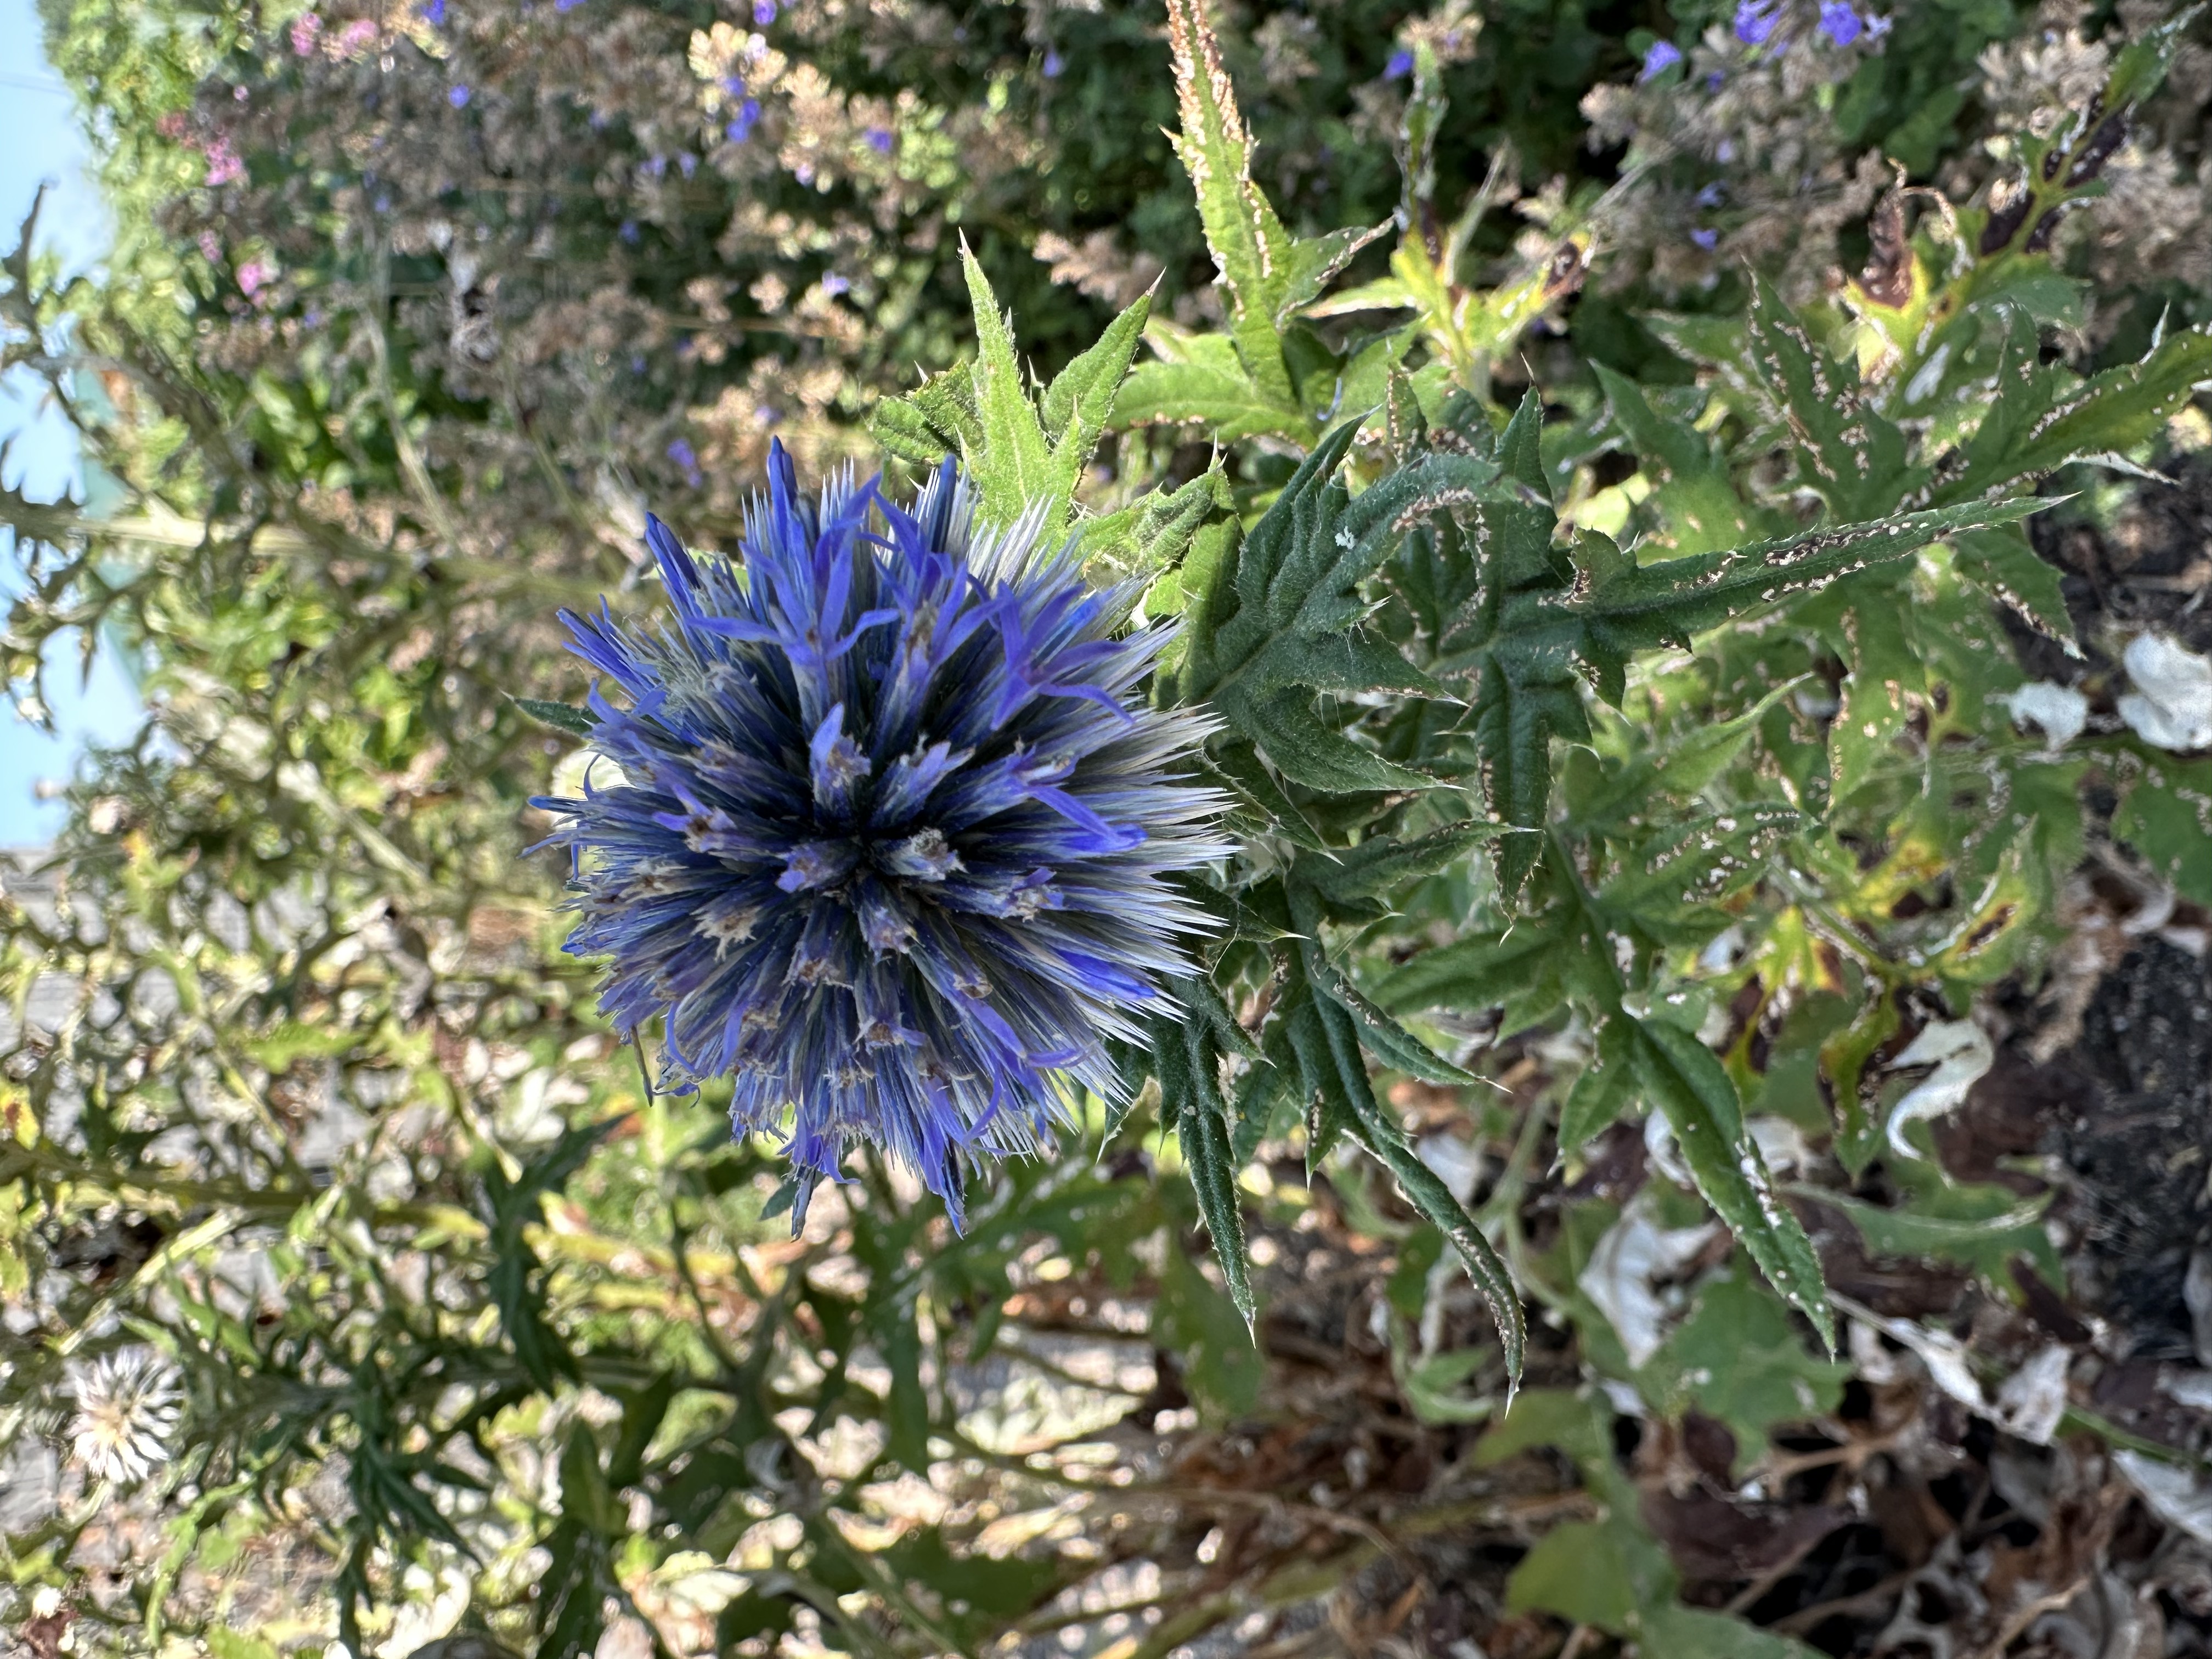 Globe Thistle plants have light blue, spherical, spiky blooms.